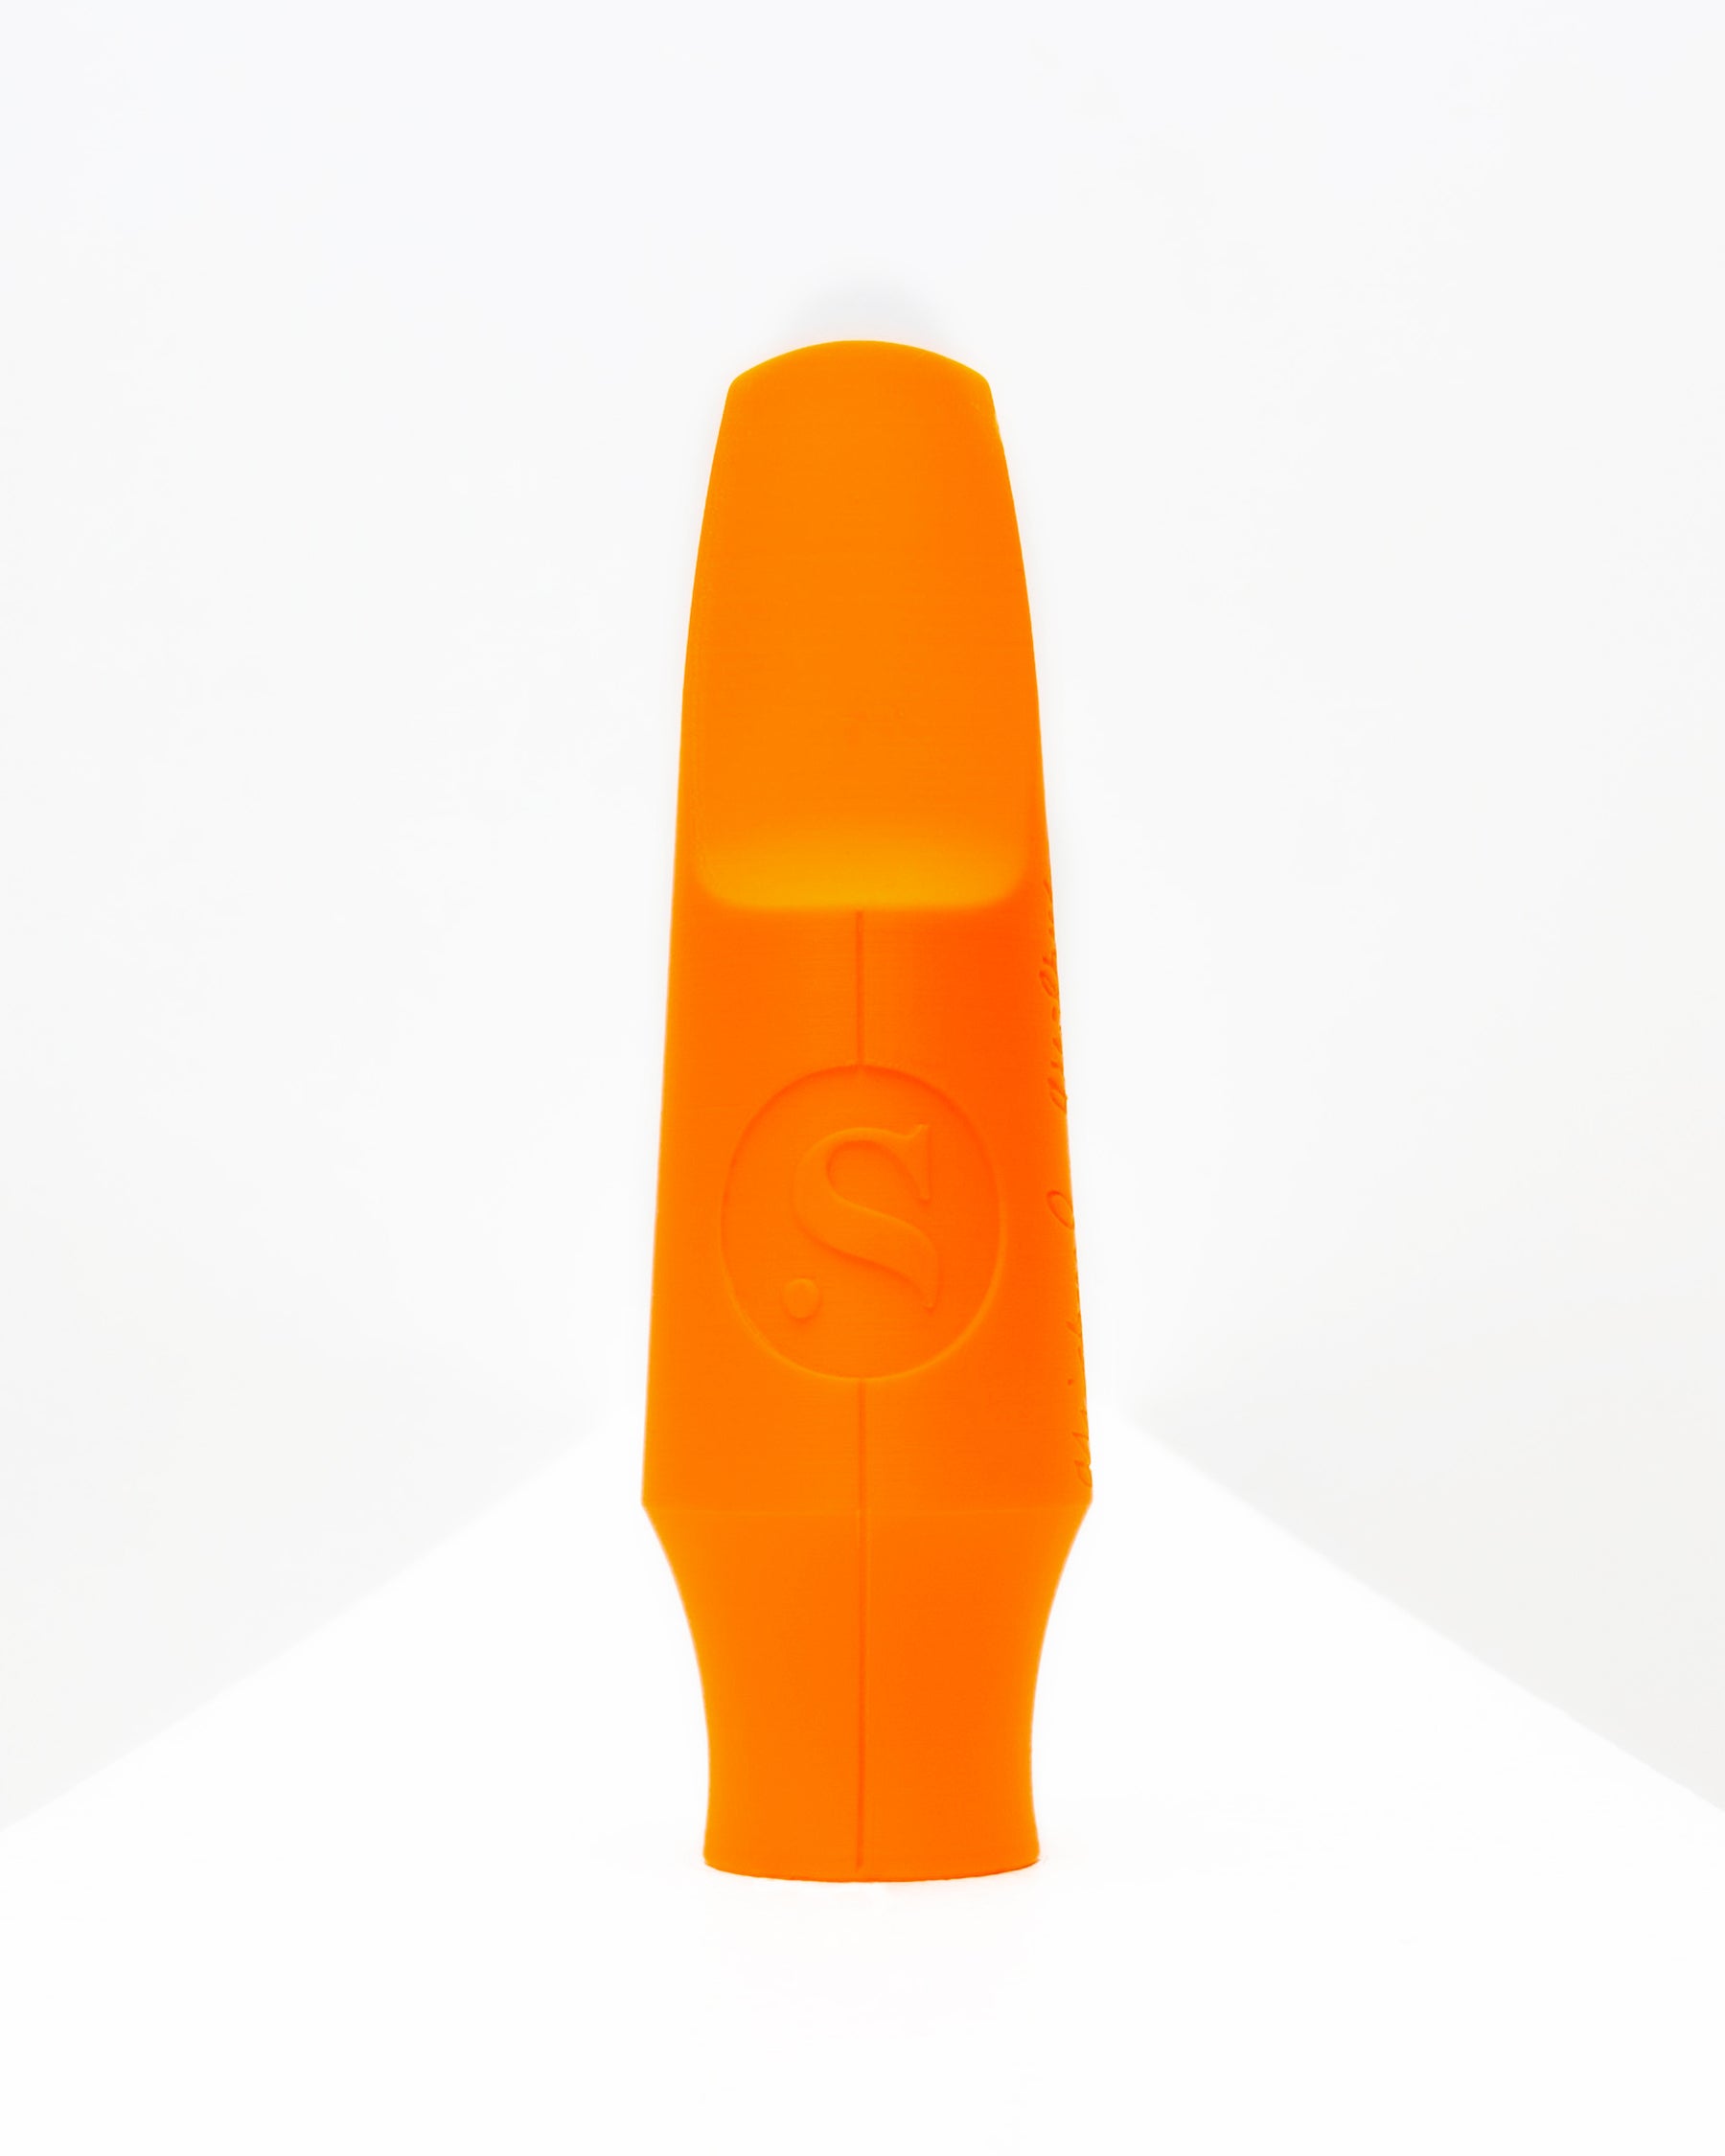 Tenor Signature Saxophone mouthpiece - Lorenzo Ferrero by Syos - 9* / Lava Orange